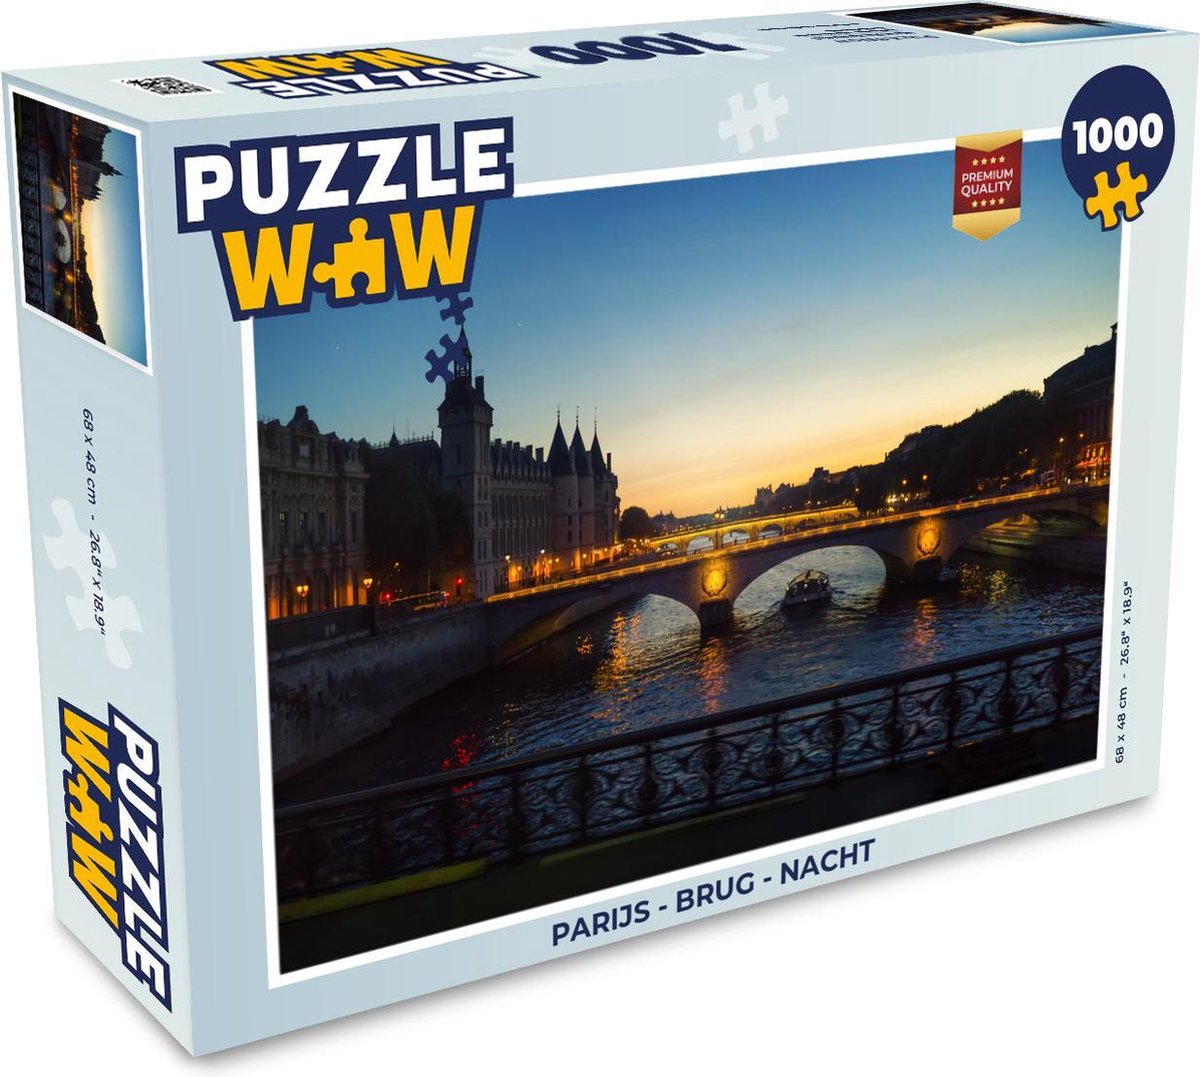 Afbeelding van product PuzzleWow  Puzzel Parijs - Brug - Nacht - Legpuzzel - Puzzel 1000 stukjes volwassenen - Sinterklaas Cadeau - Kerstcadeau